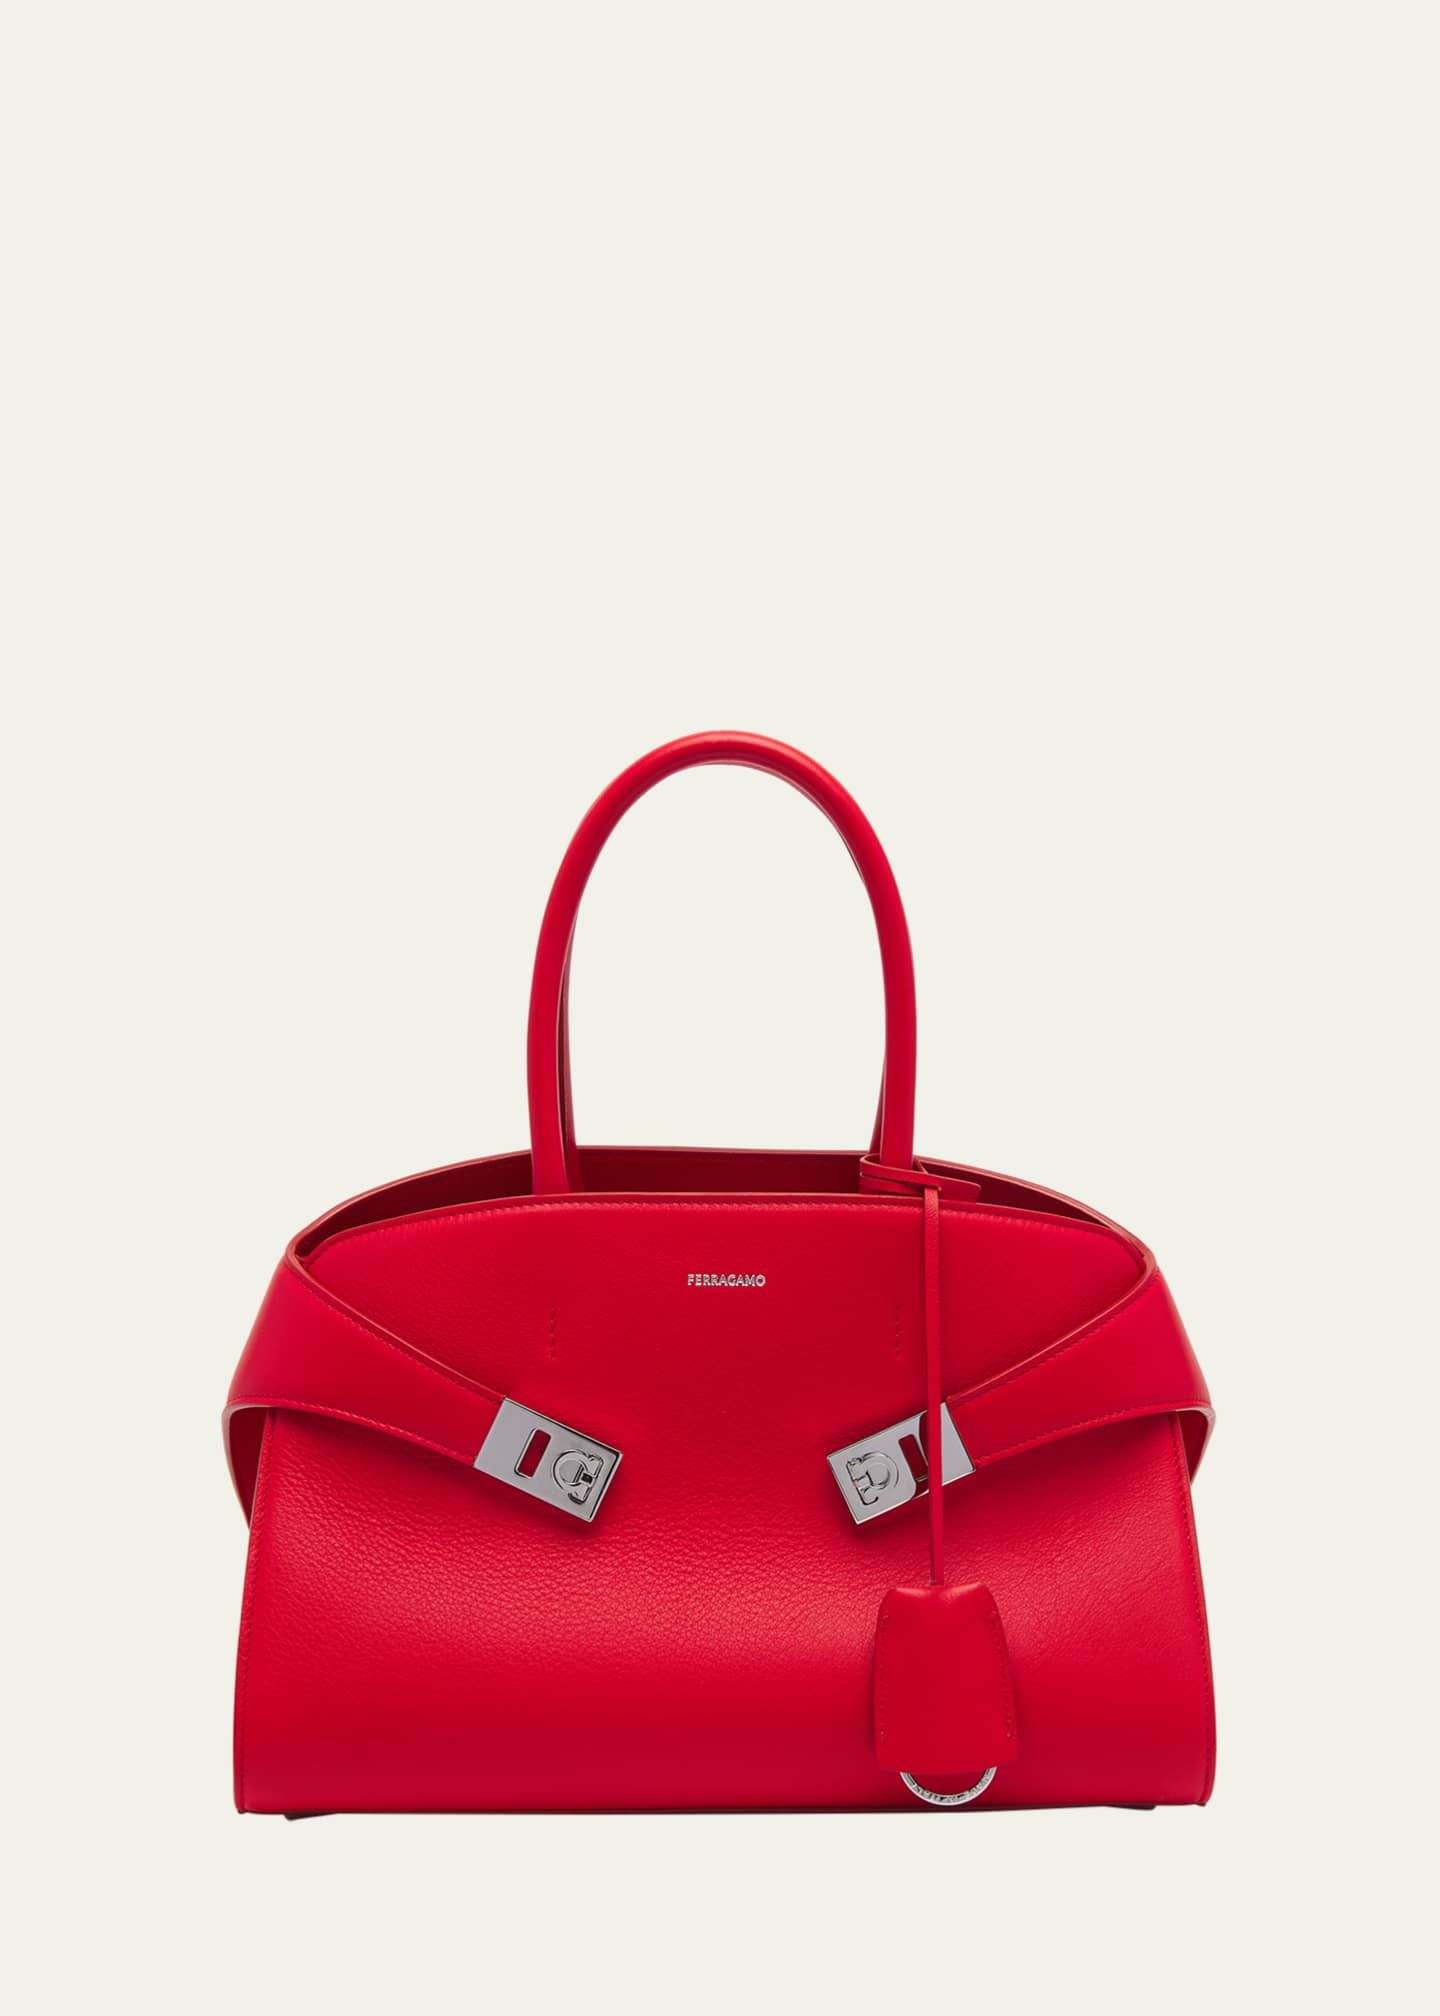 Tory Burch's Private Sale 2022 Has Designer Bag Deals